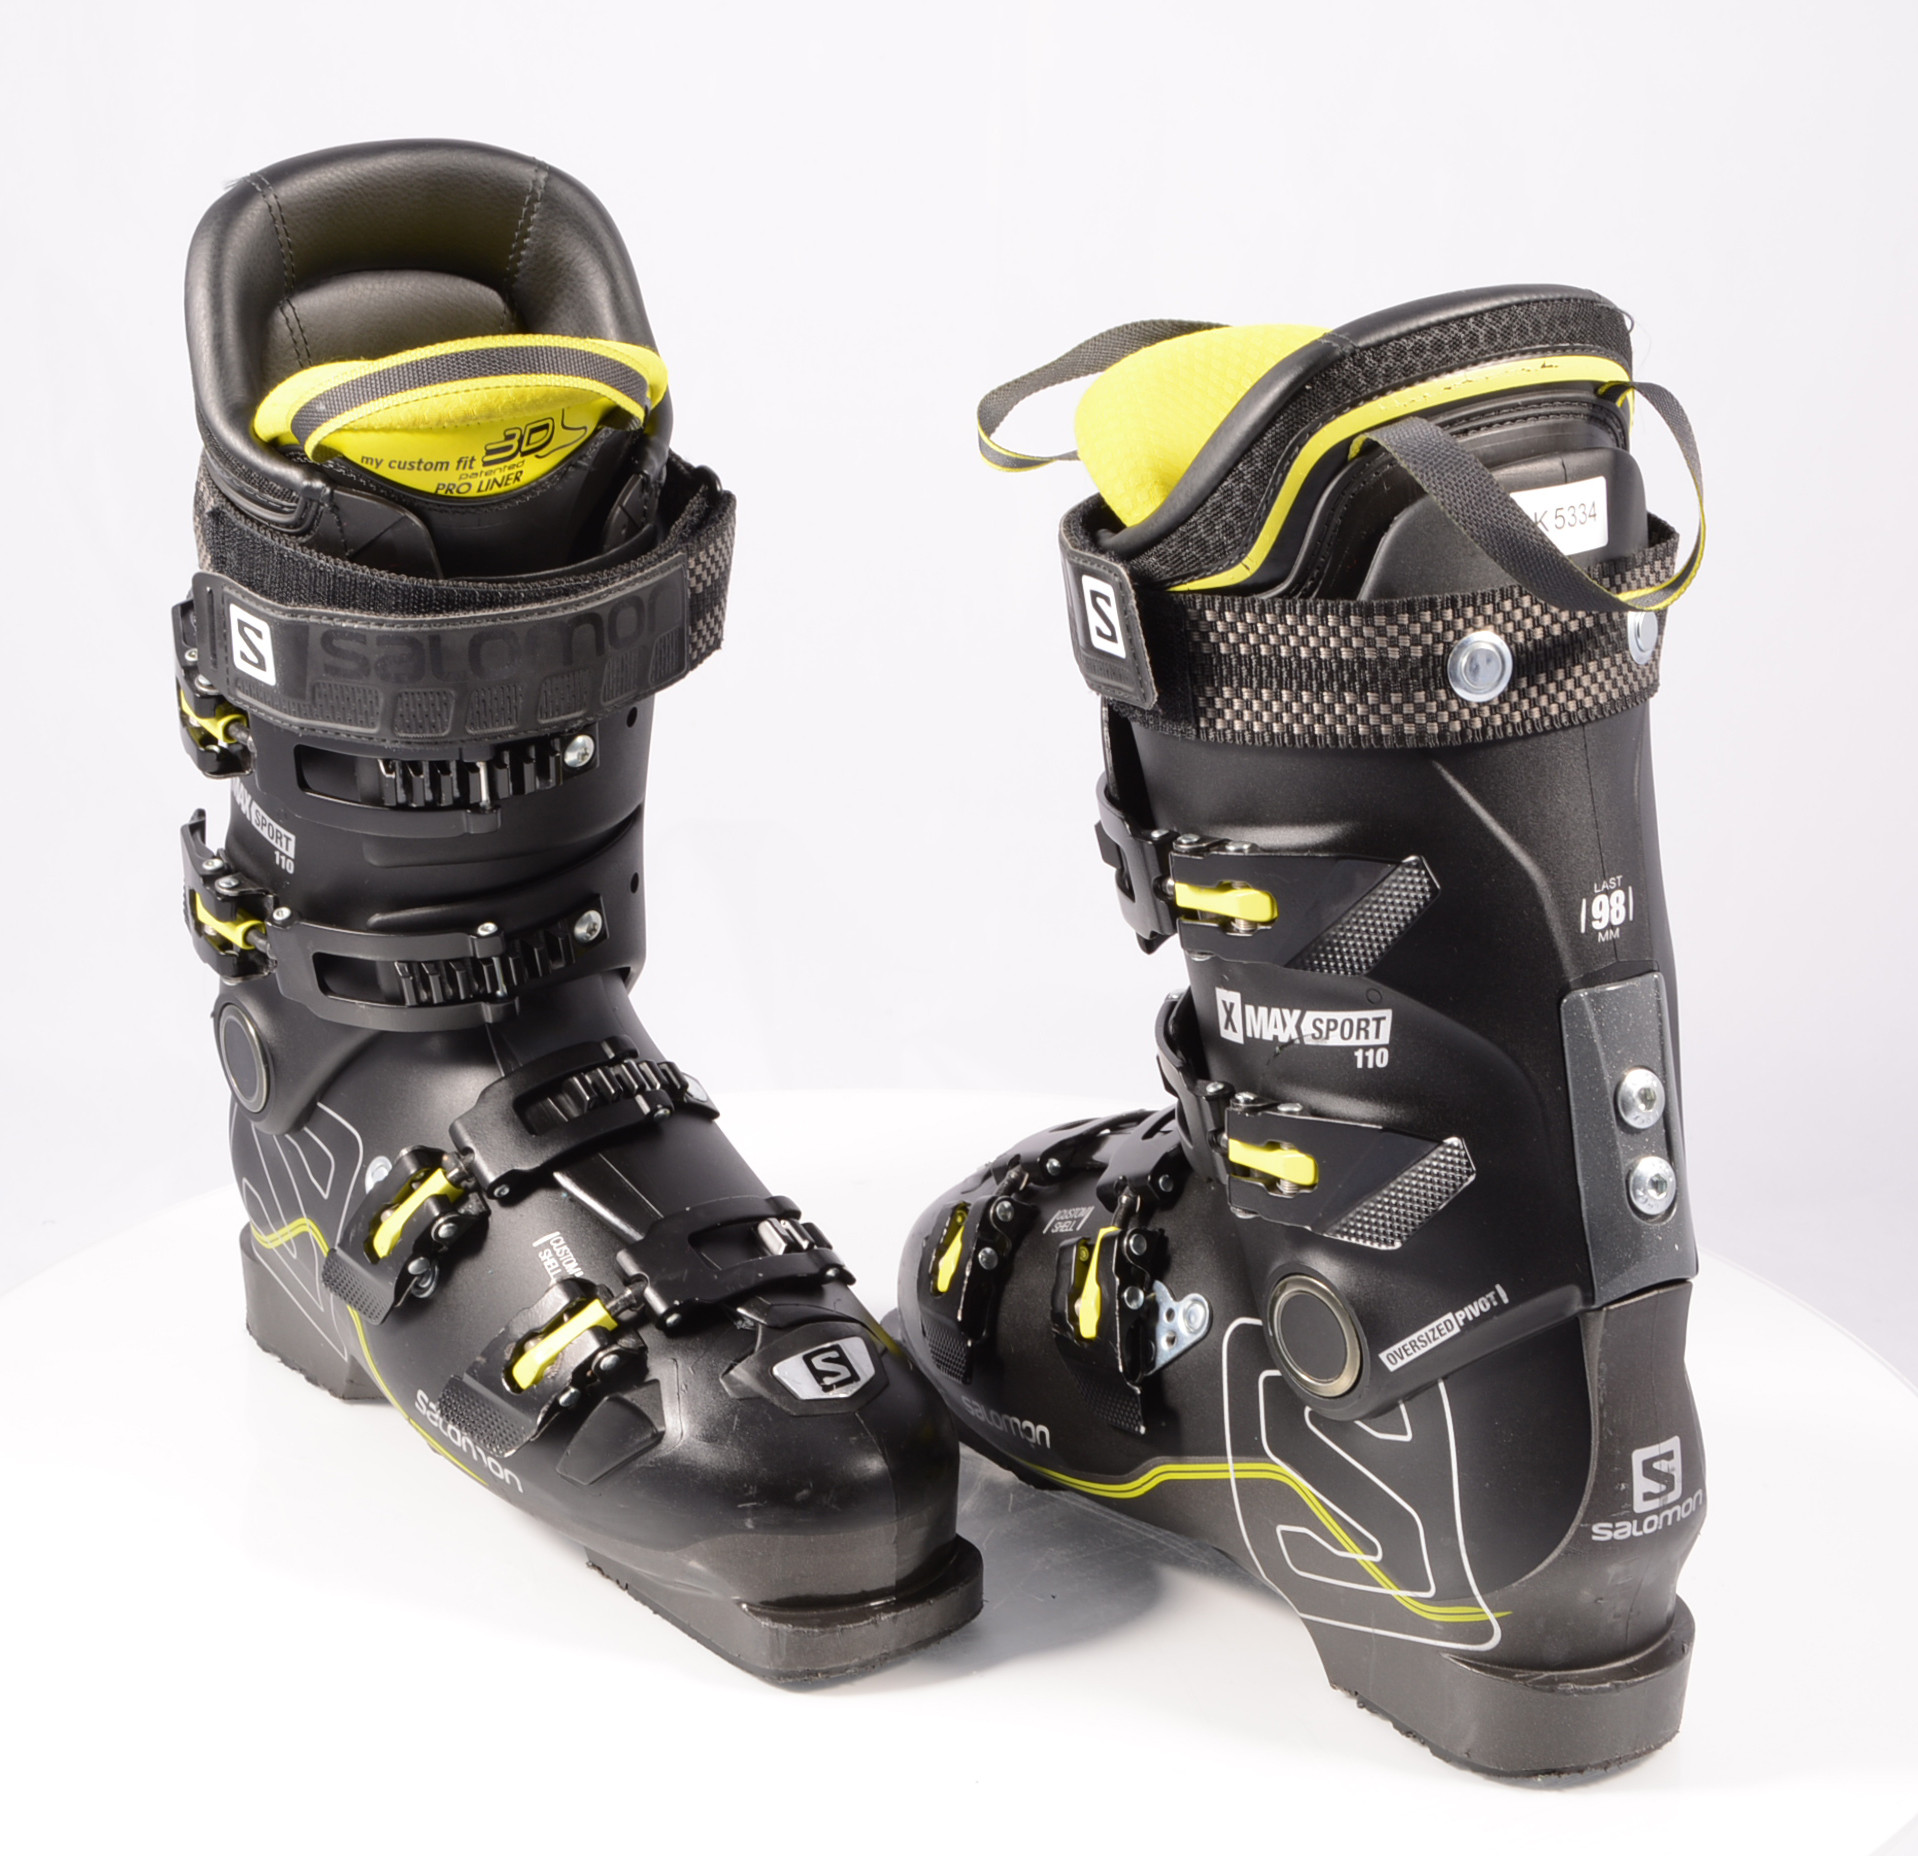 manager affix Moeras ski boots SALOMON X MAX 110 SPORT 2019, My custom fit 3D, Pro liner, Custom  shell, Oversized pivot - Mardosport.com